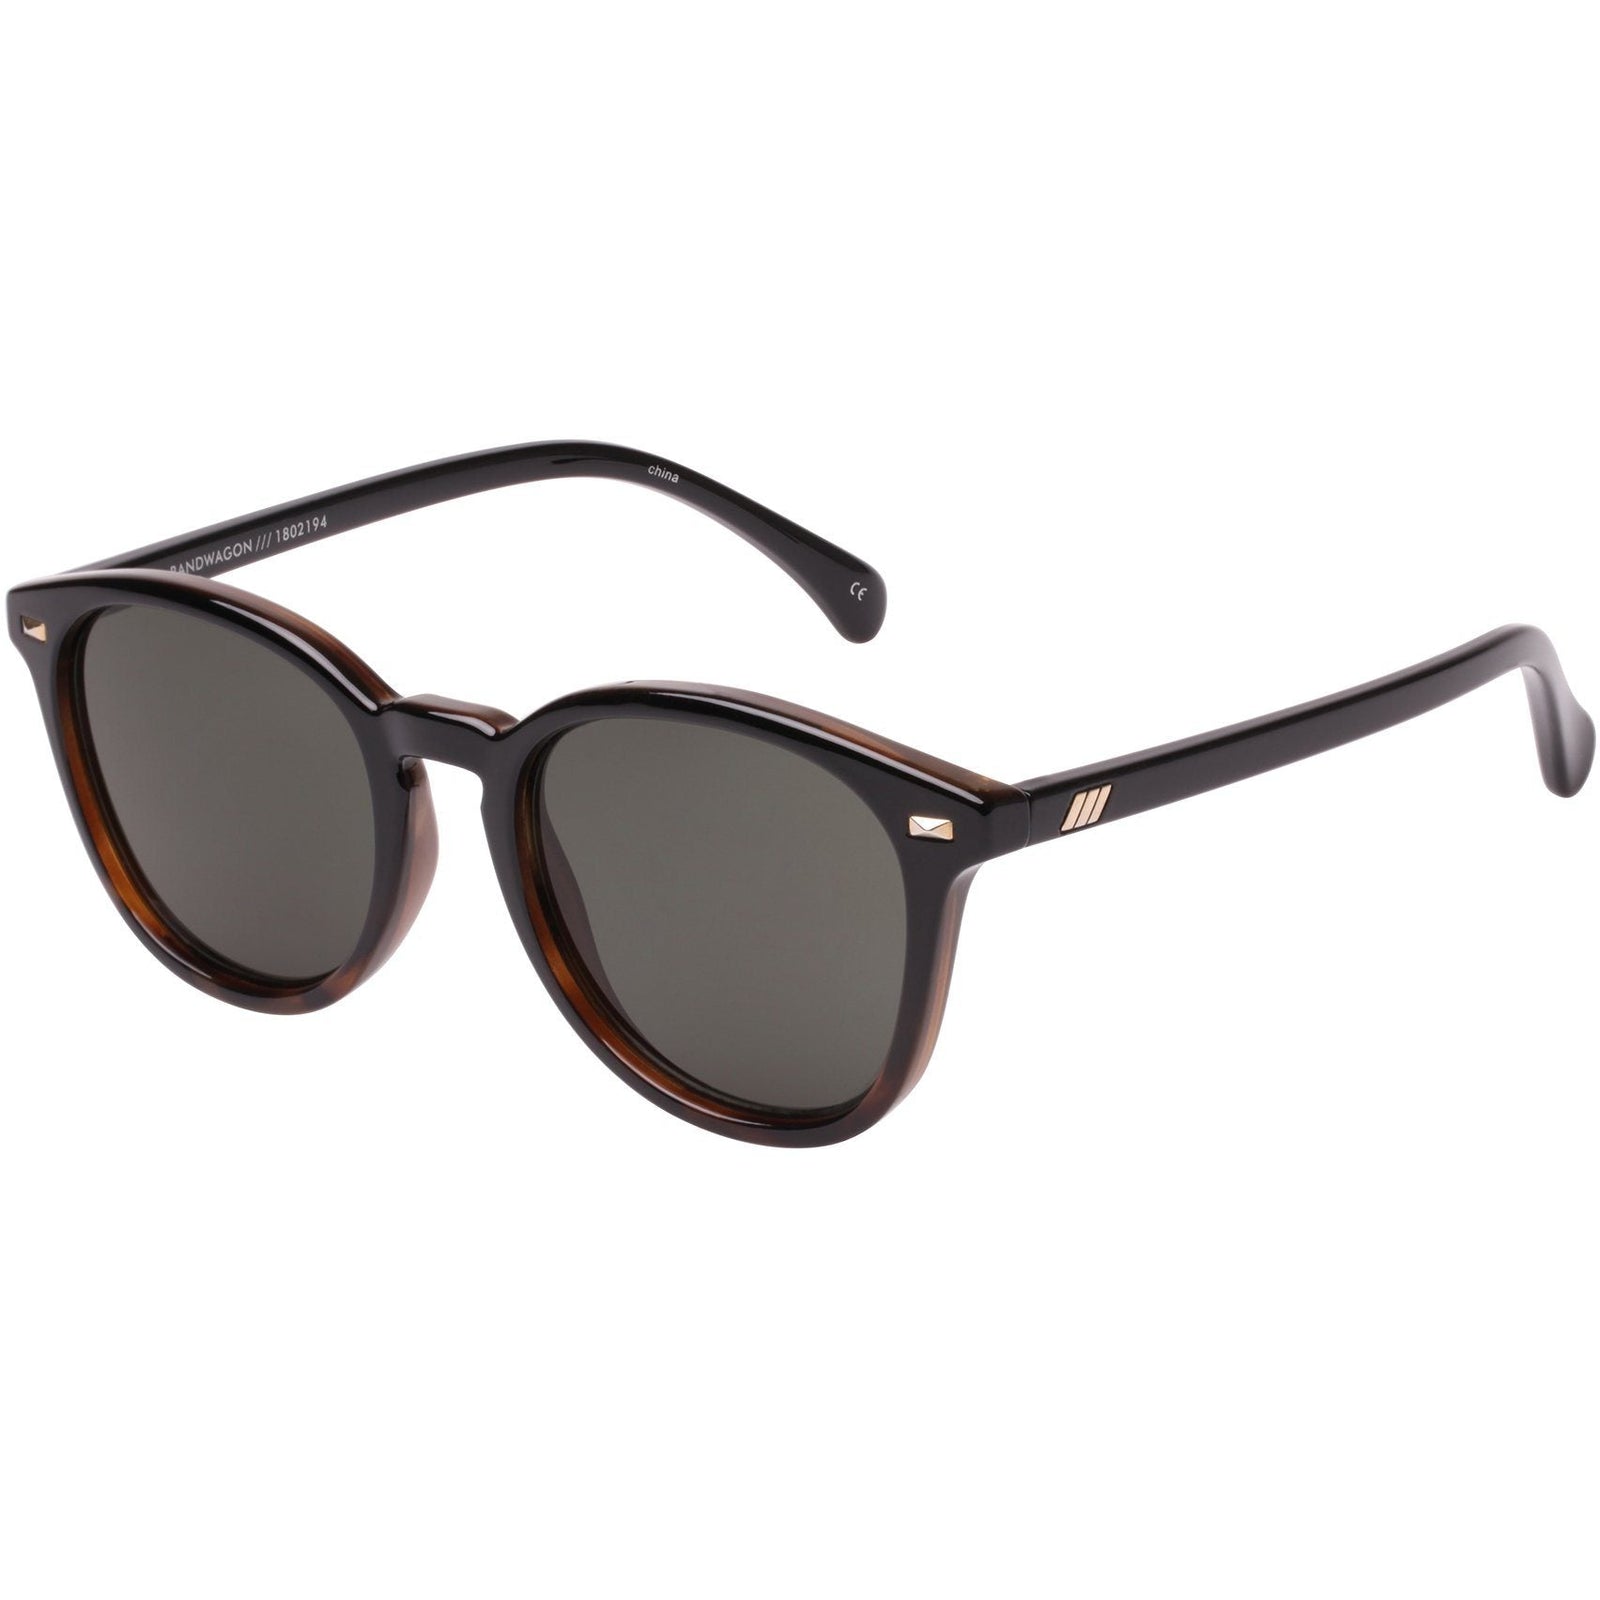 Sunglasses Le | Specs Black Bandwagon Round Tort Uni-Sex